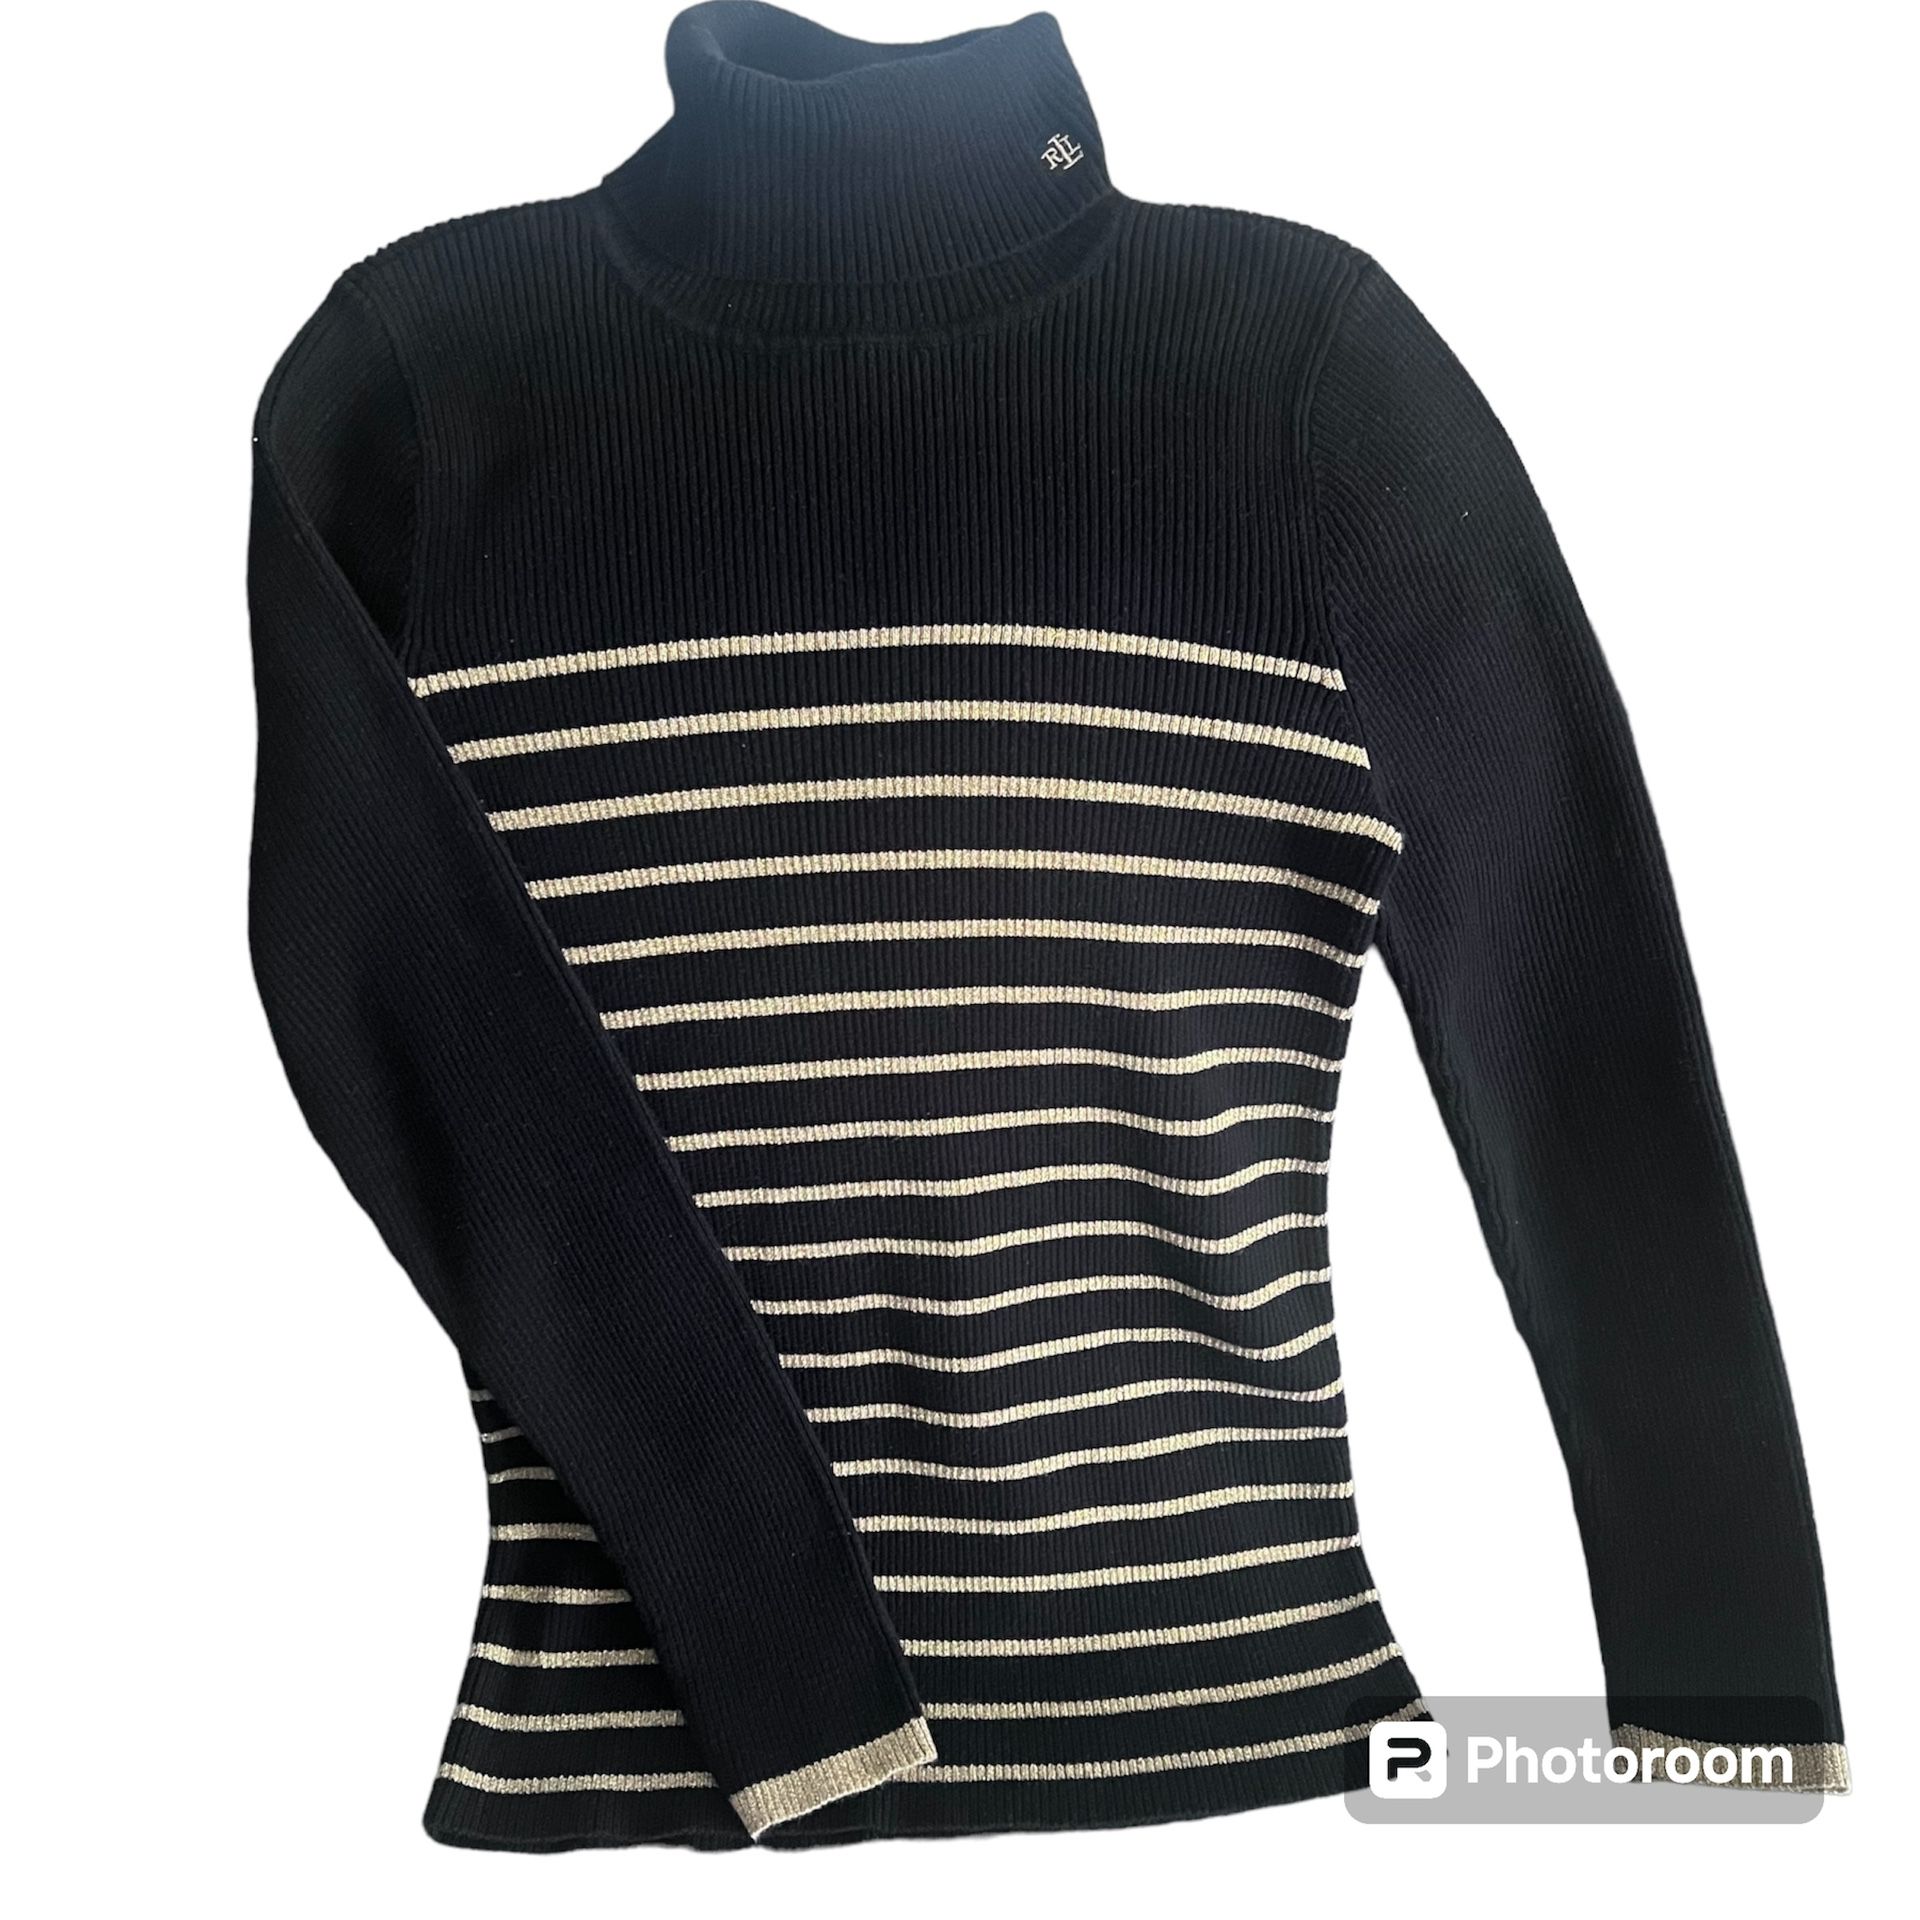 LAUREN RALPH LAUREN Size Large Black Gold Stripe Ribbed Turtleneck Sweater